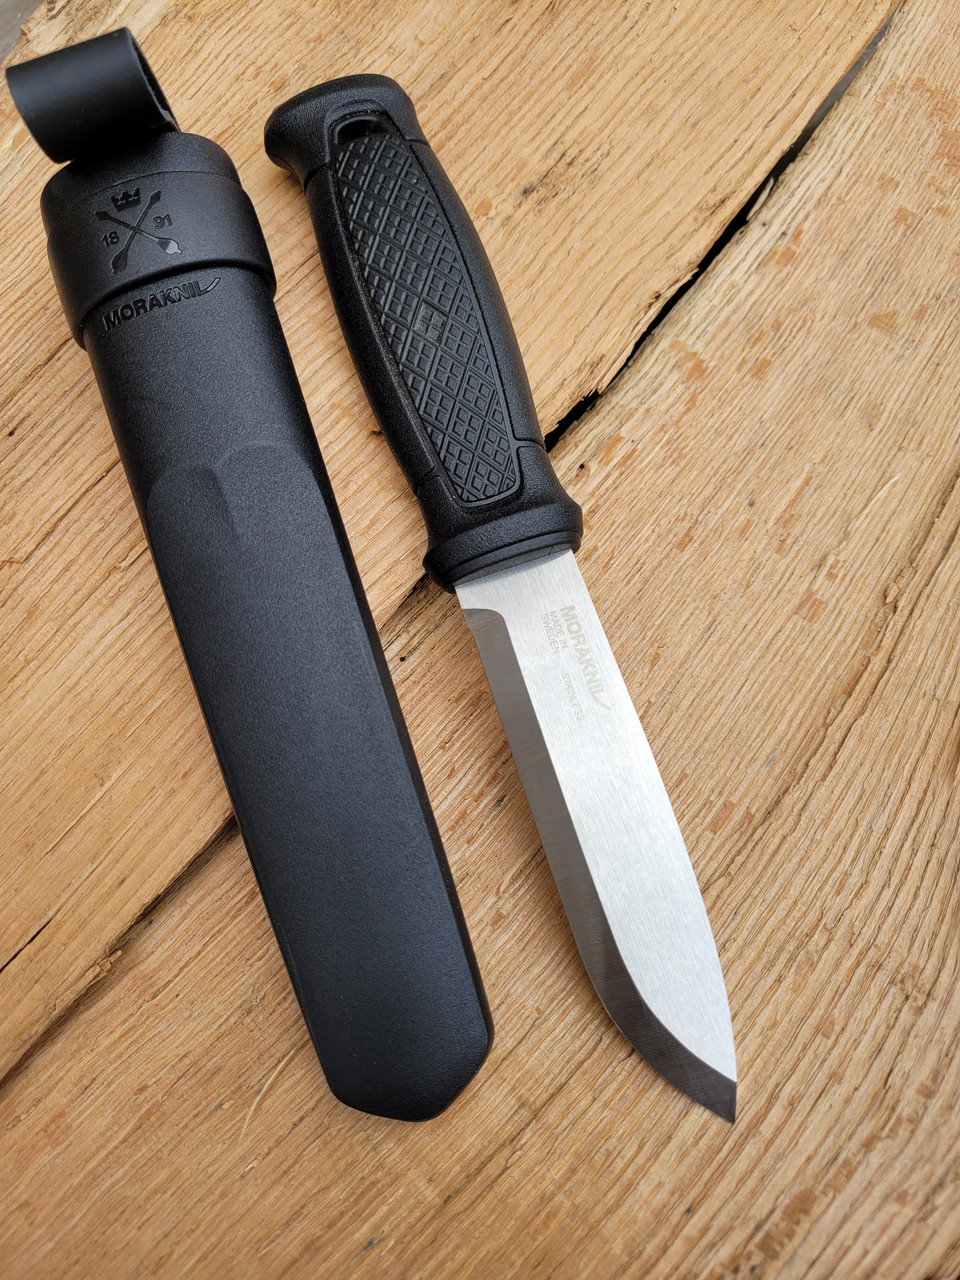 Mora Garberg Tip Modification SEND ME YOUR KNIFE - Bens Outdoor